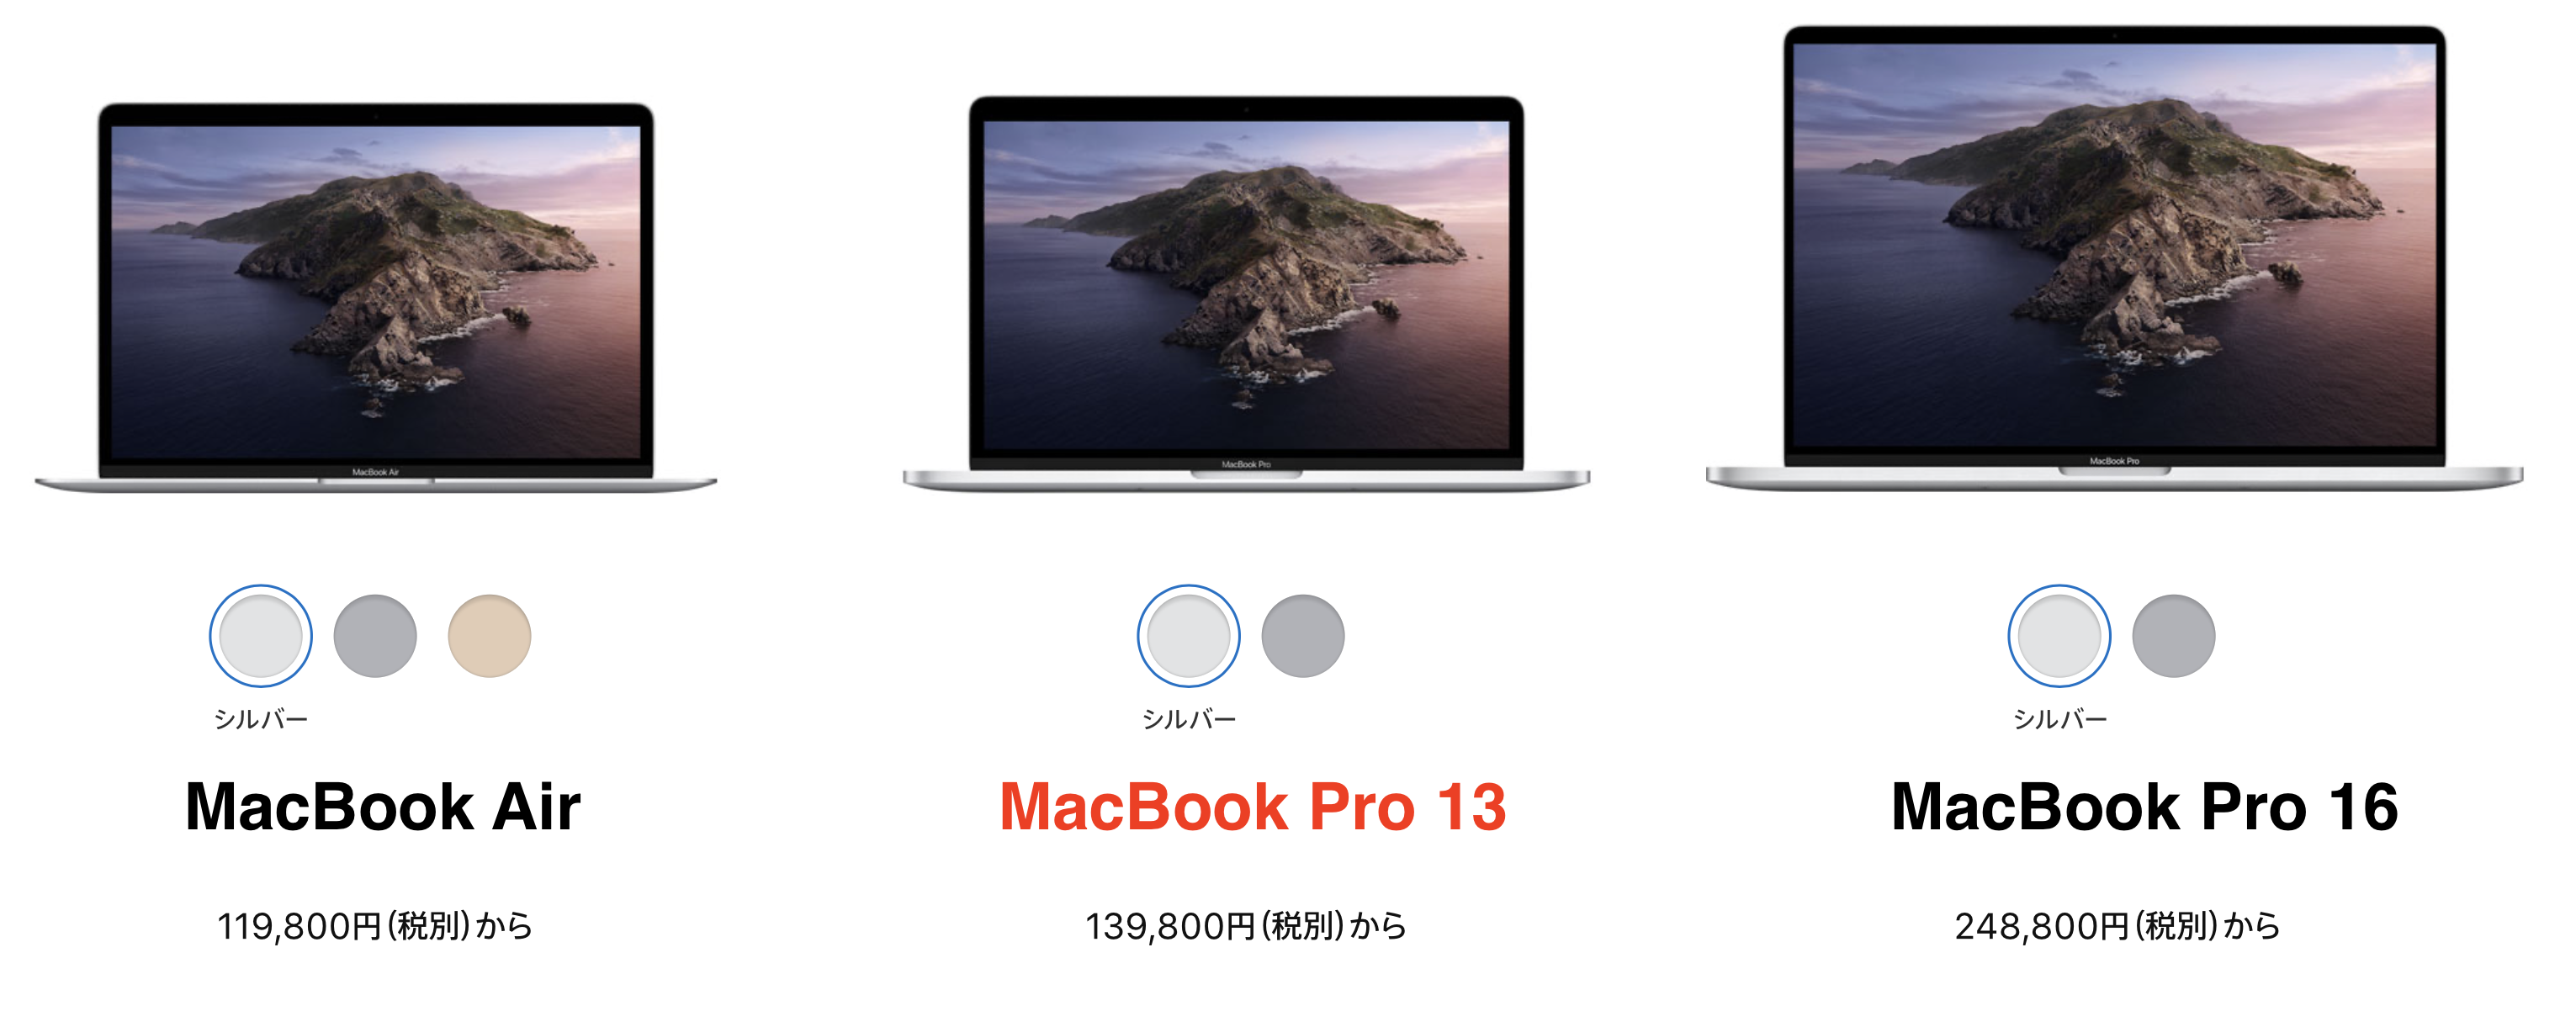 MacBook別価格比較